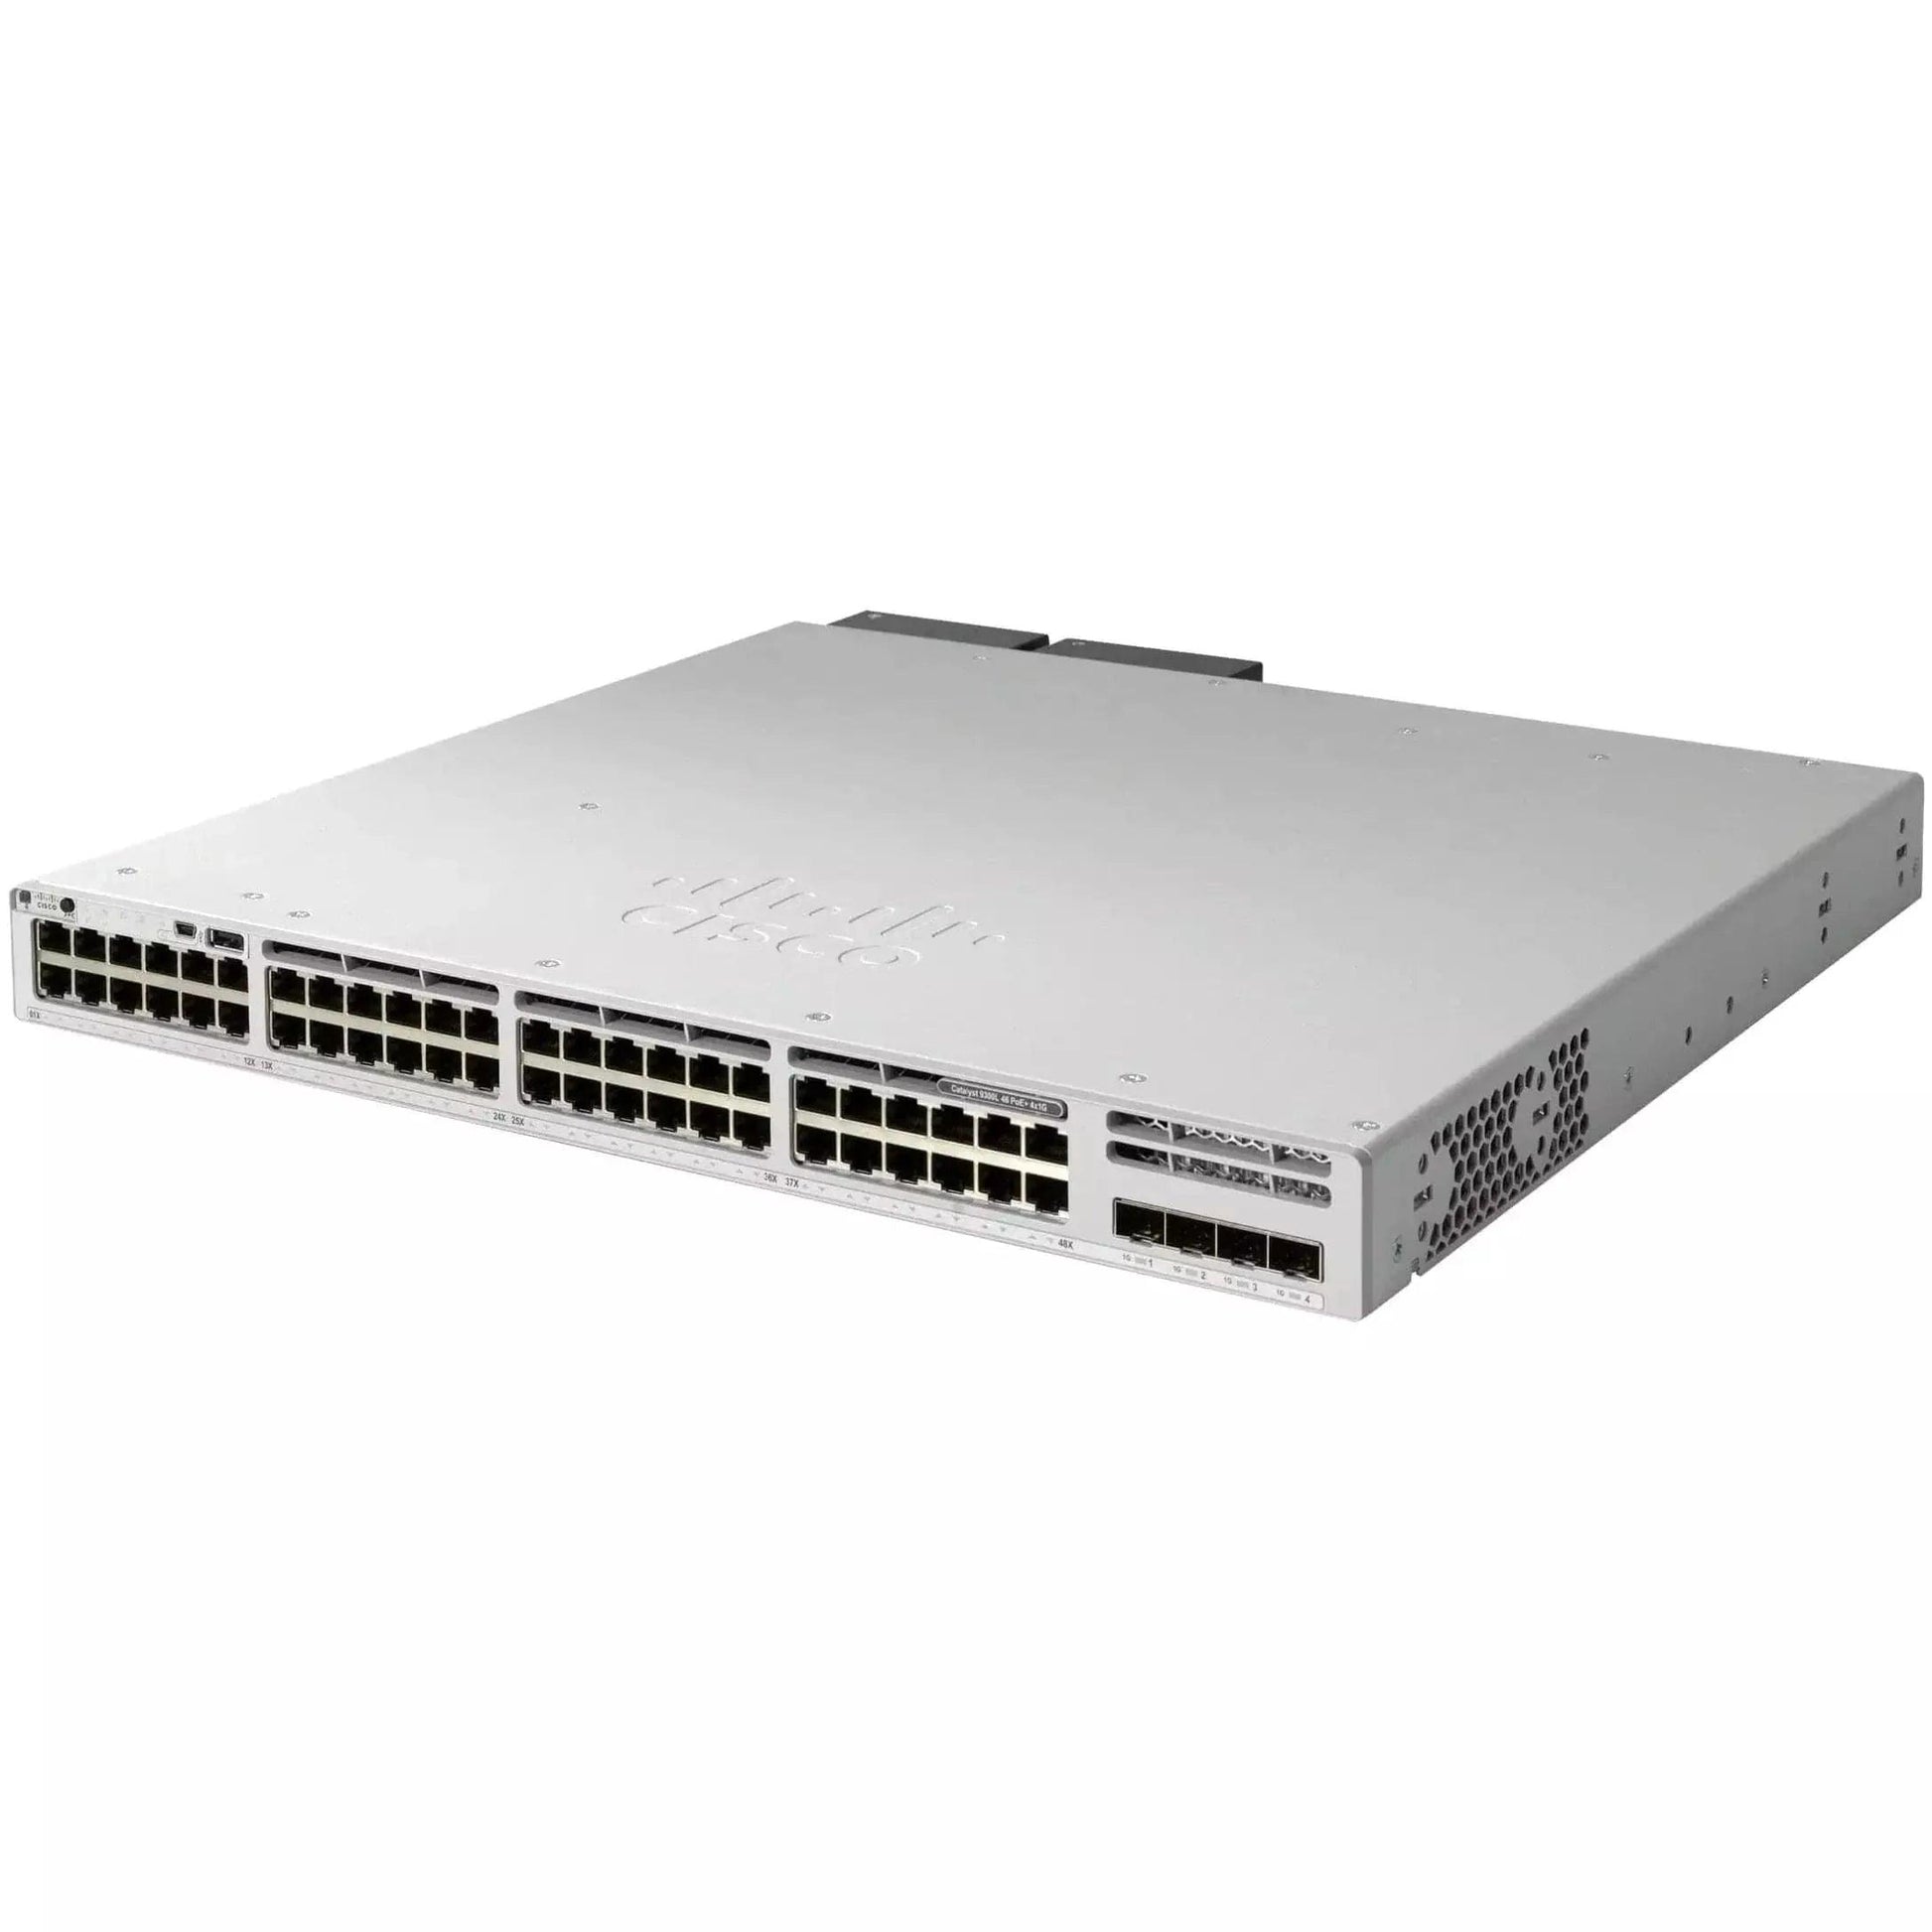 Cisco Catalyst 9300 48-port 1G copper with fixed 4x10G/1G SFP+ uplinks, full PoE+ Network Essentials - C9300L-48PF-4X-E - Refurbished - C9300L-48PF-4X-E-R - Reef Telecom